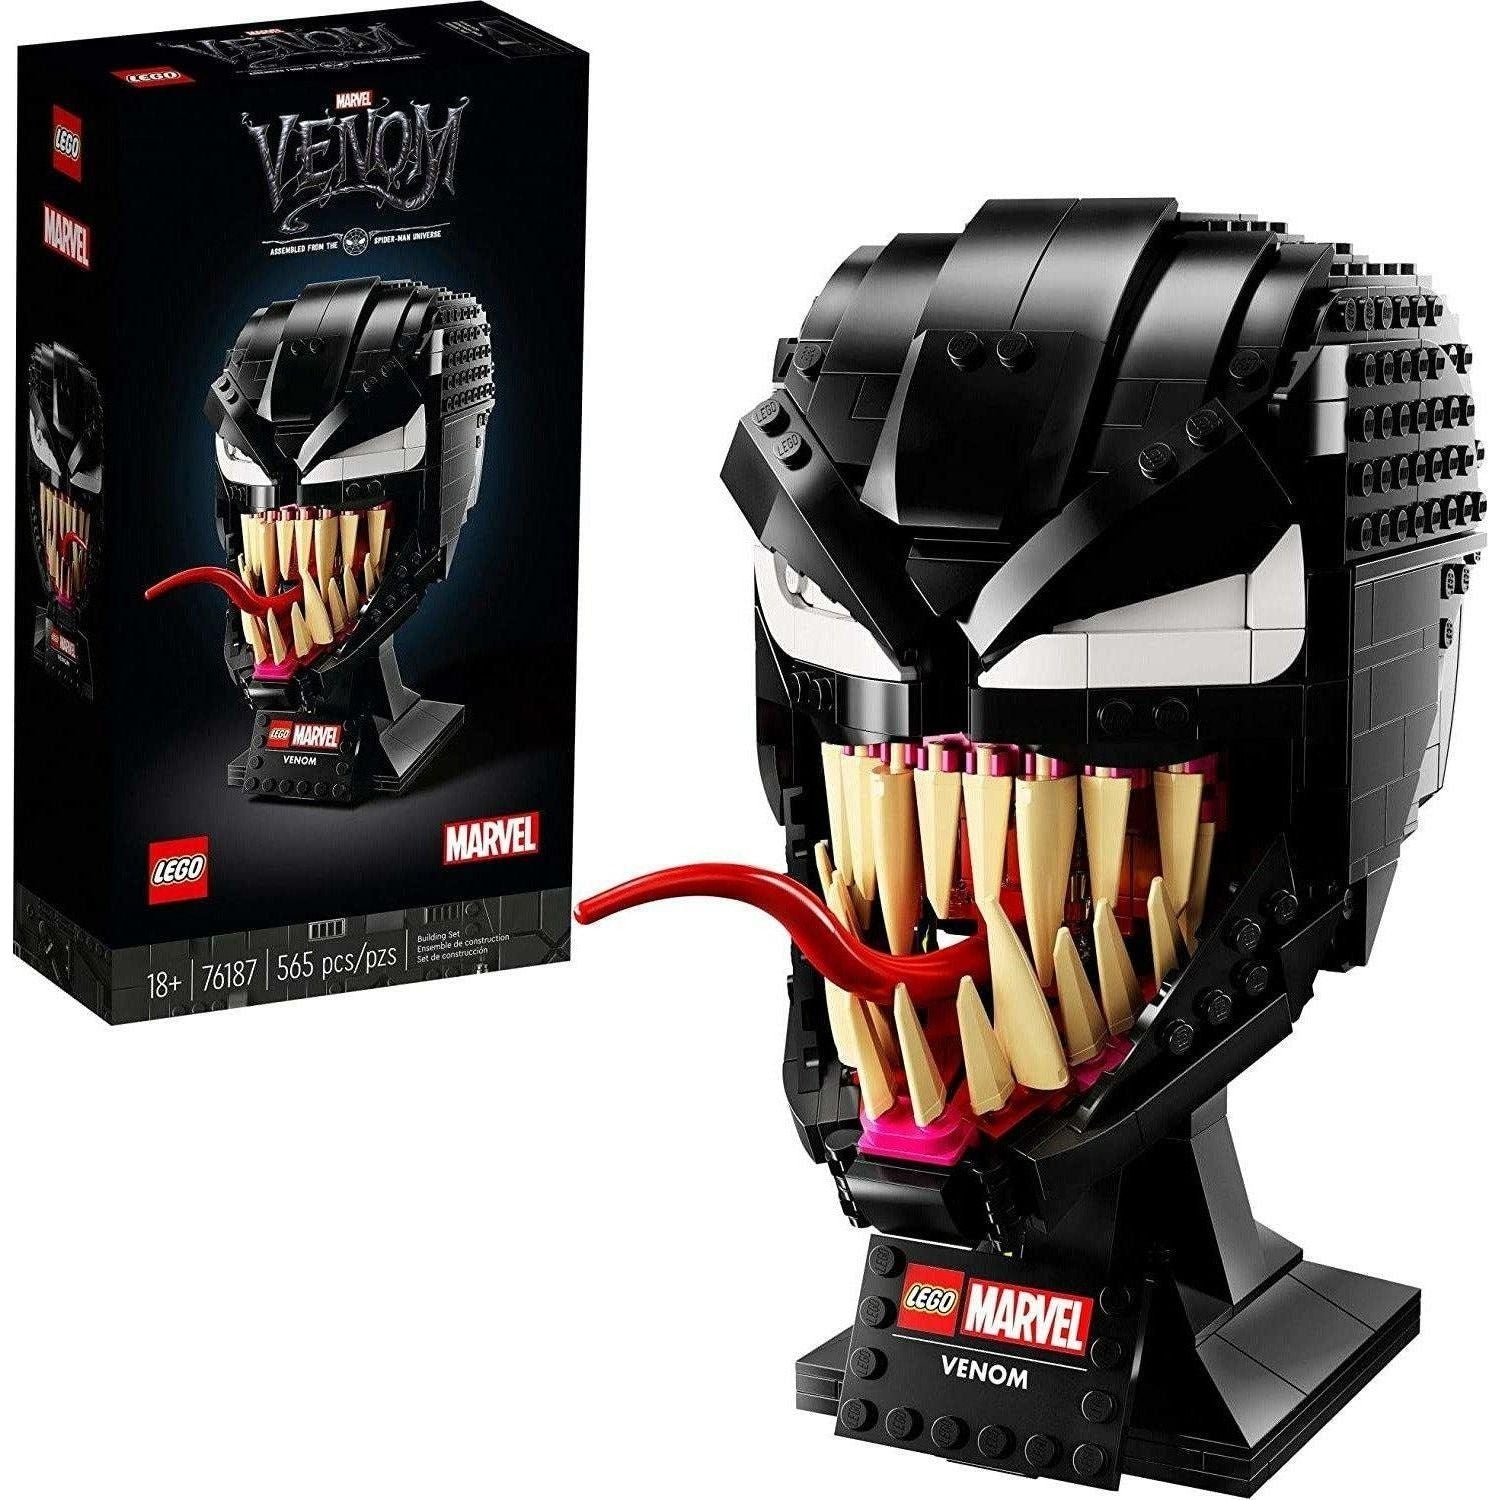 LEGO 76187 Marvel Spider-Man Venom Collectible Building Kit 565 Pieces - BumbleToys - 14 Years & Up, 18+, Boys, LEGO, Marvel, OXE, Pre-Order, Venom